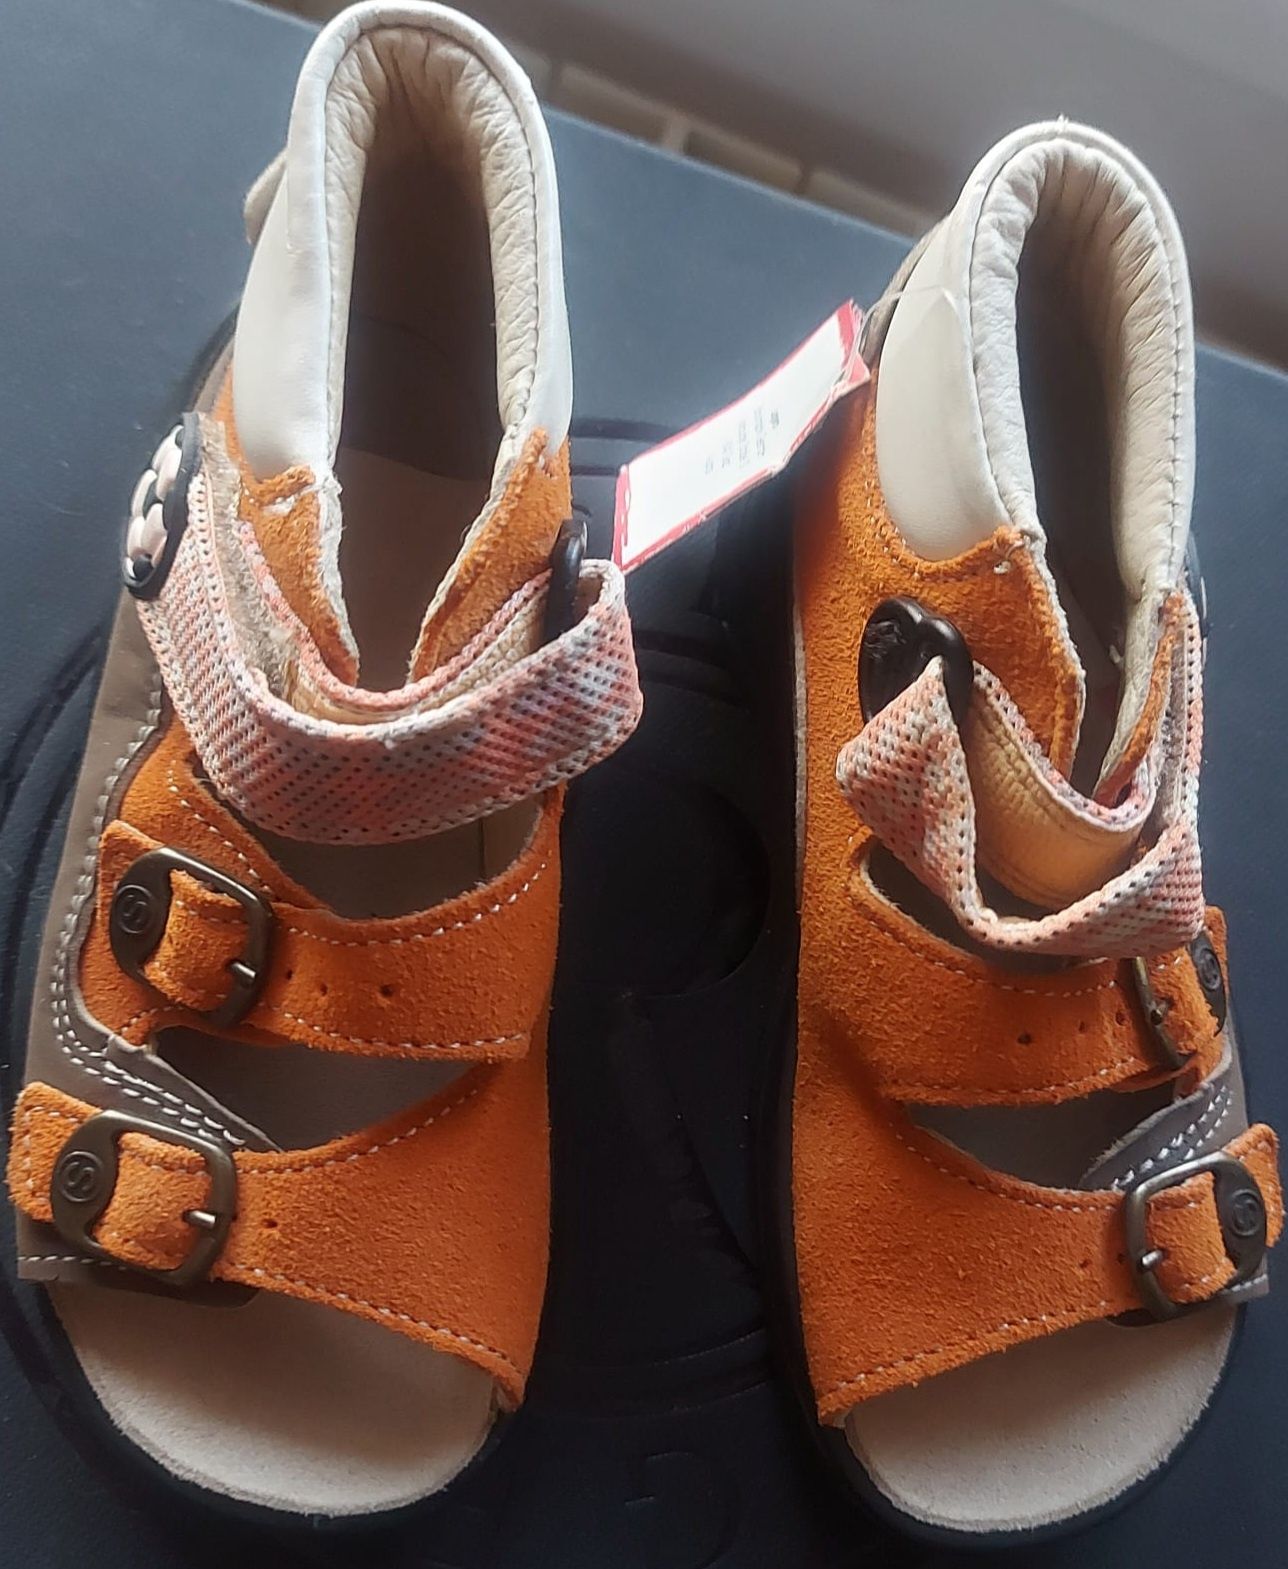 Sandale de copii piele naturala NOI, SuperFit marime 26, maro roscat